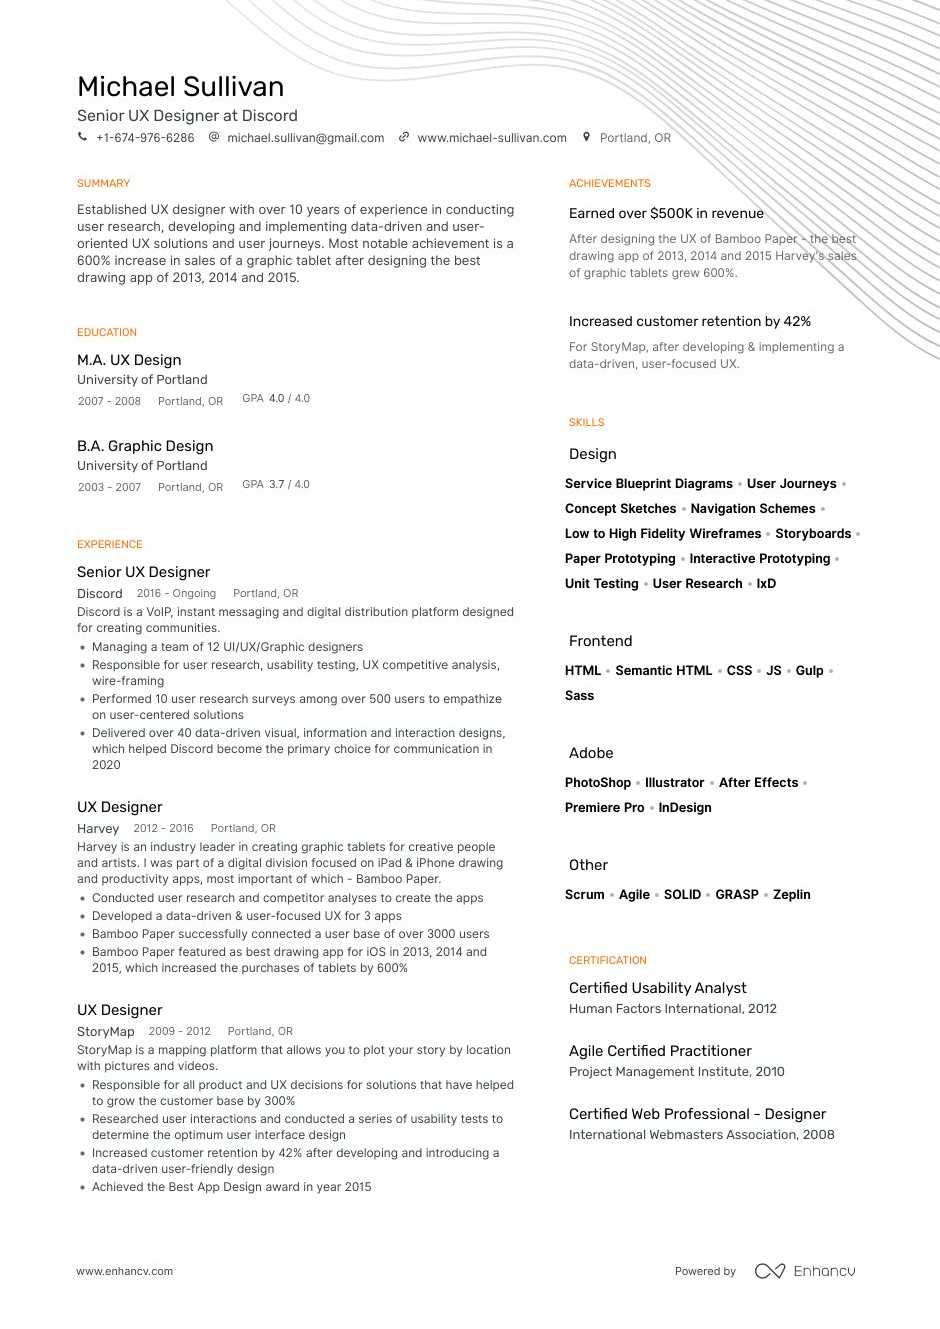 ux designer resume template free download